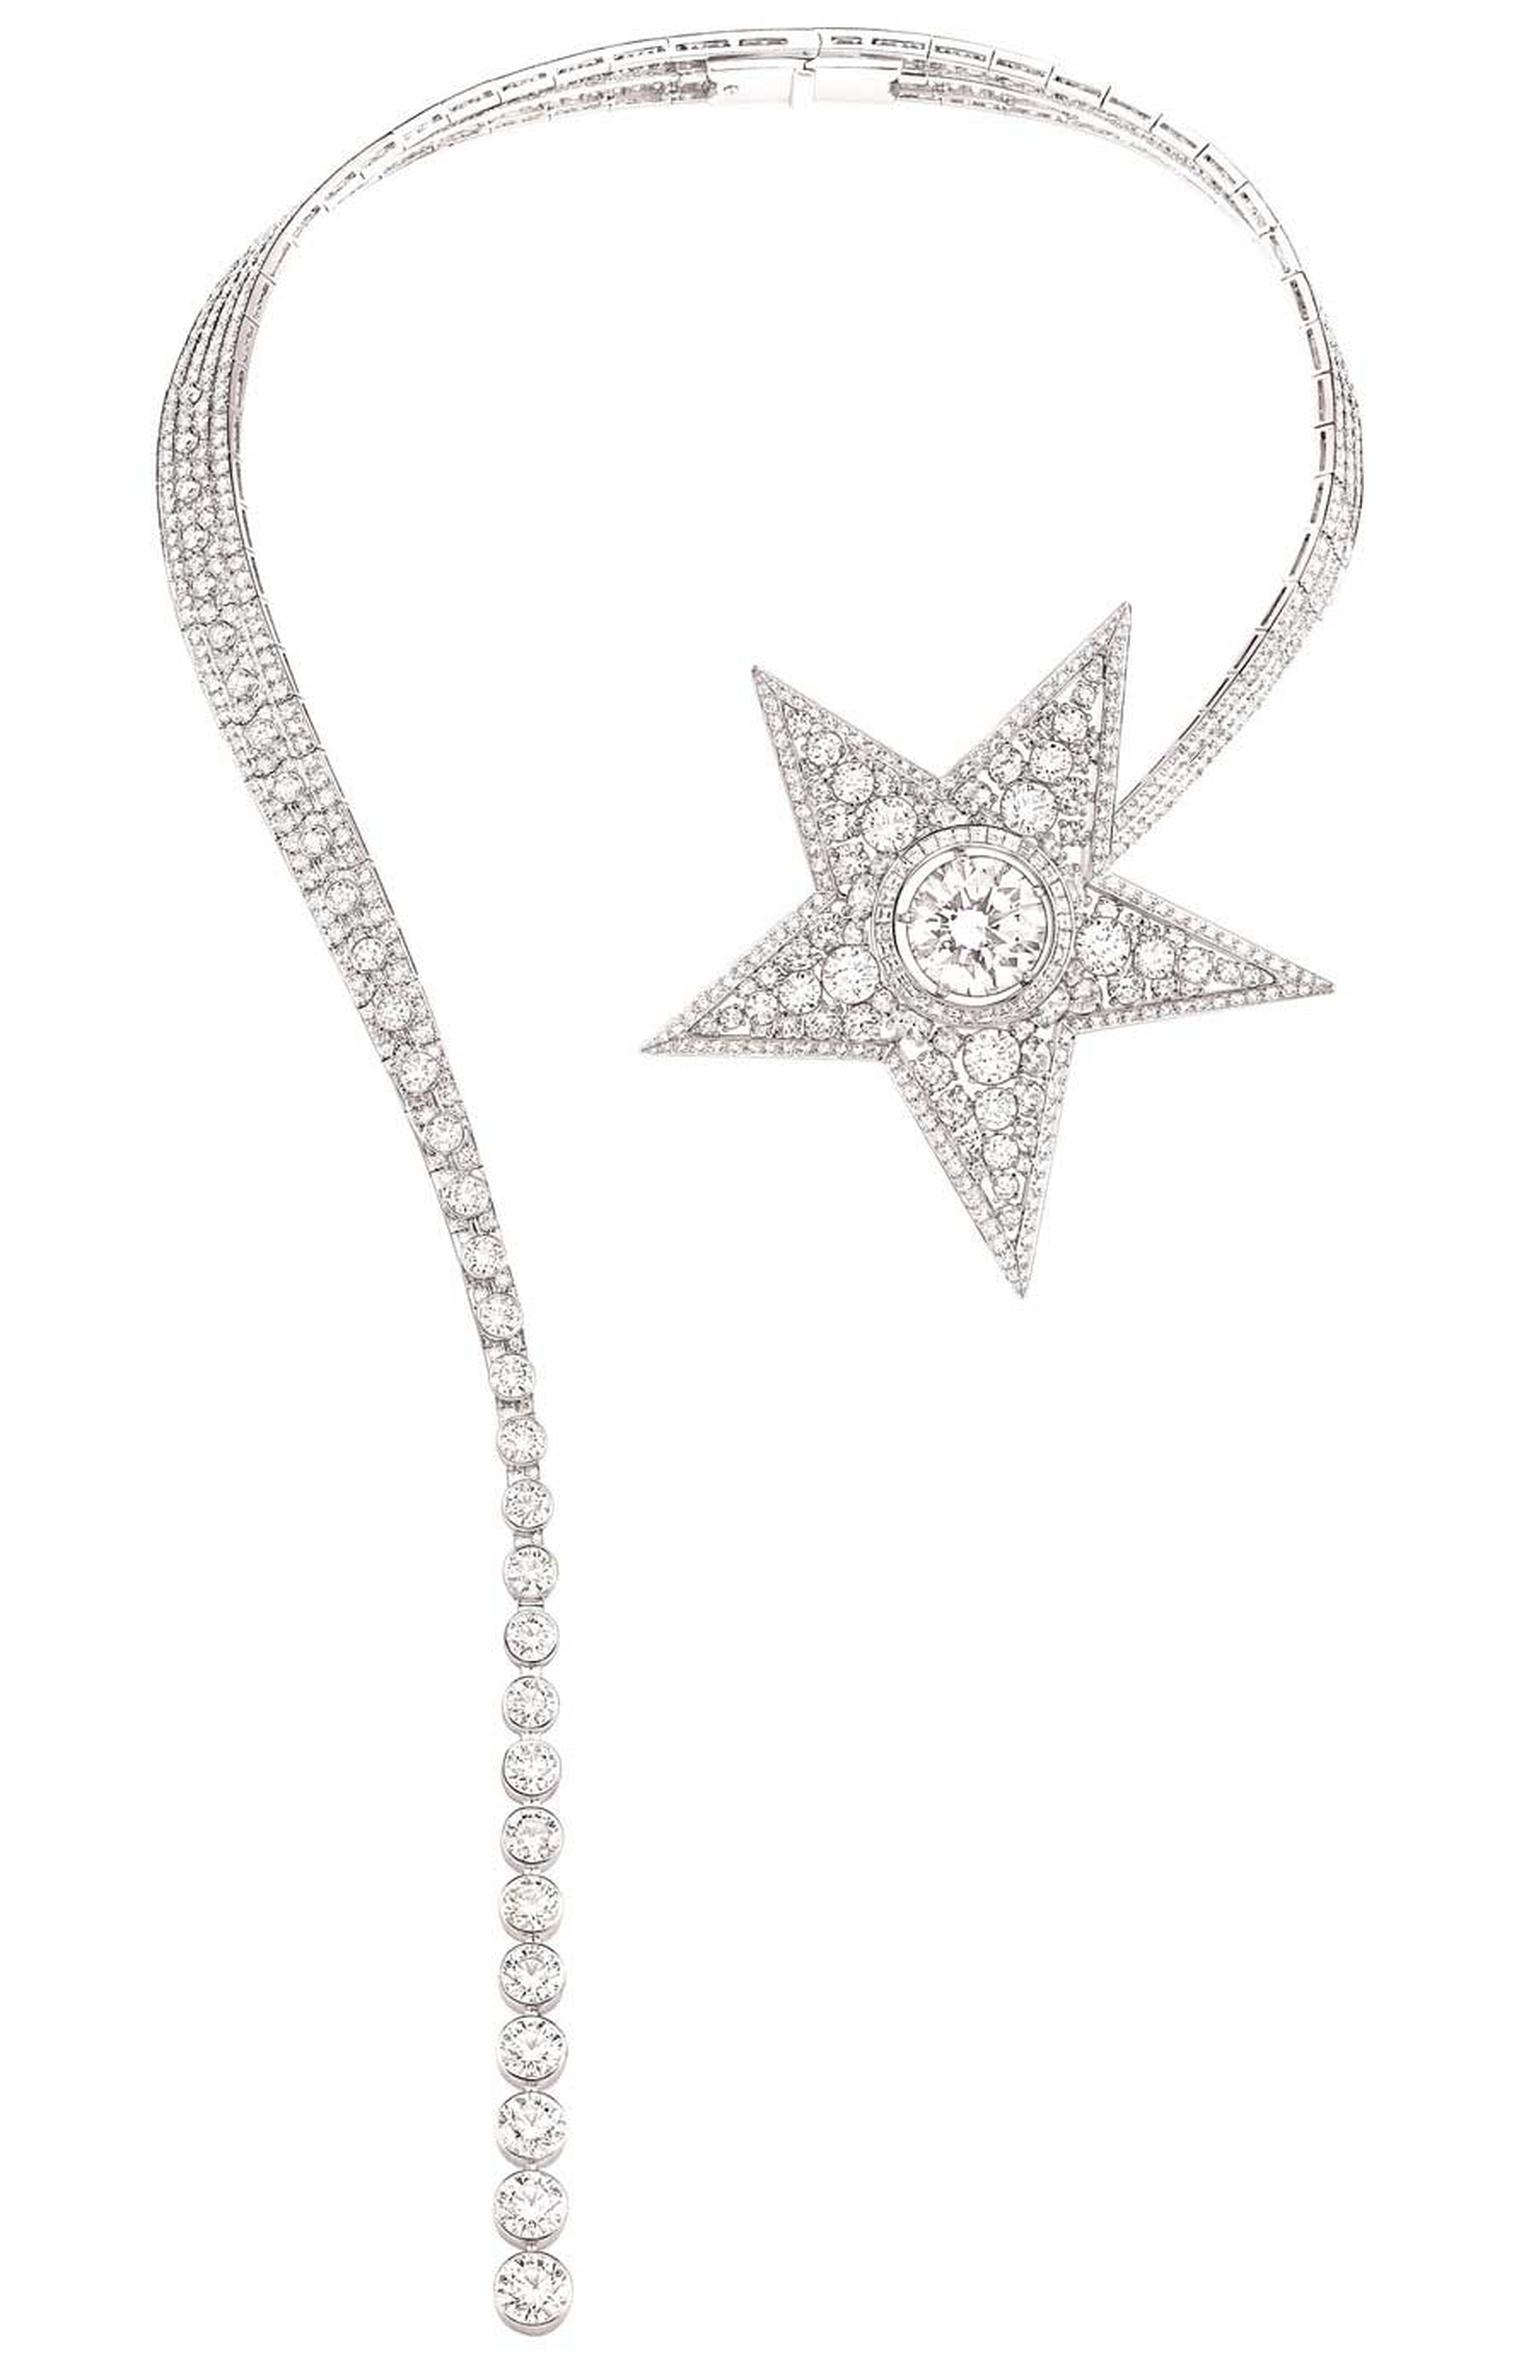 Chanel white gold Comete necklace featuring around-cut diamonds (14.8ct), 823 round-cut diamonds (61ct) and 34 princess-cut diamonds.